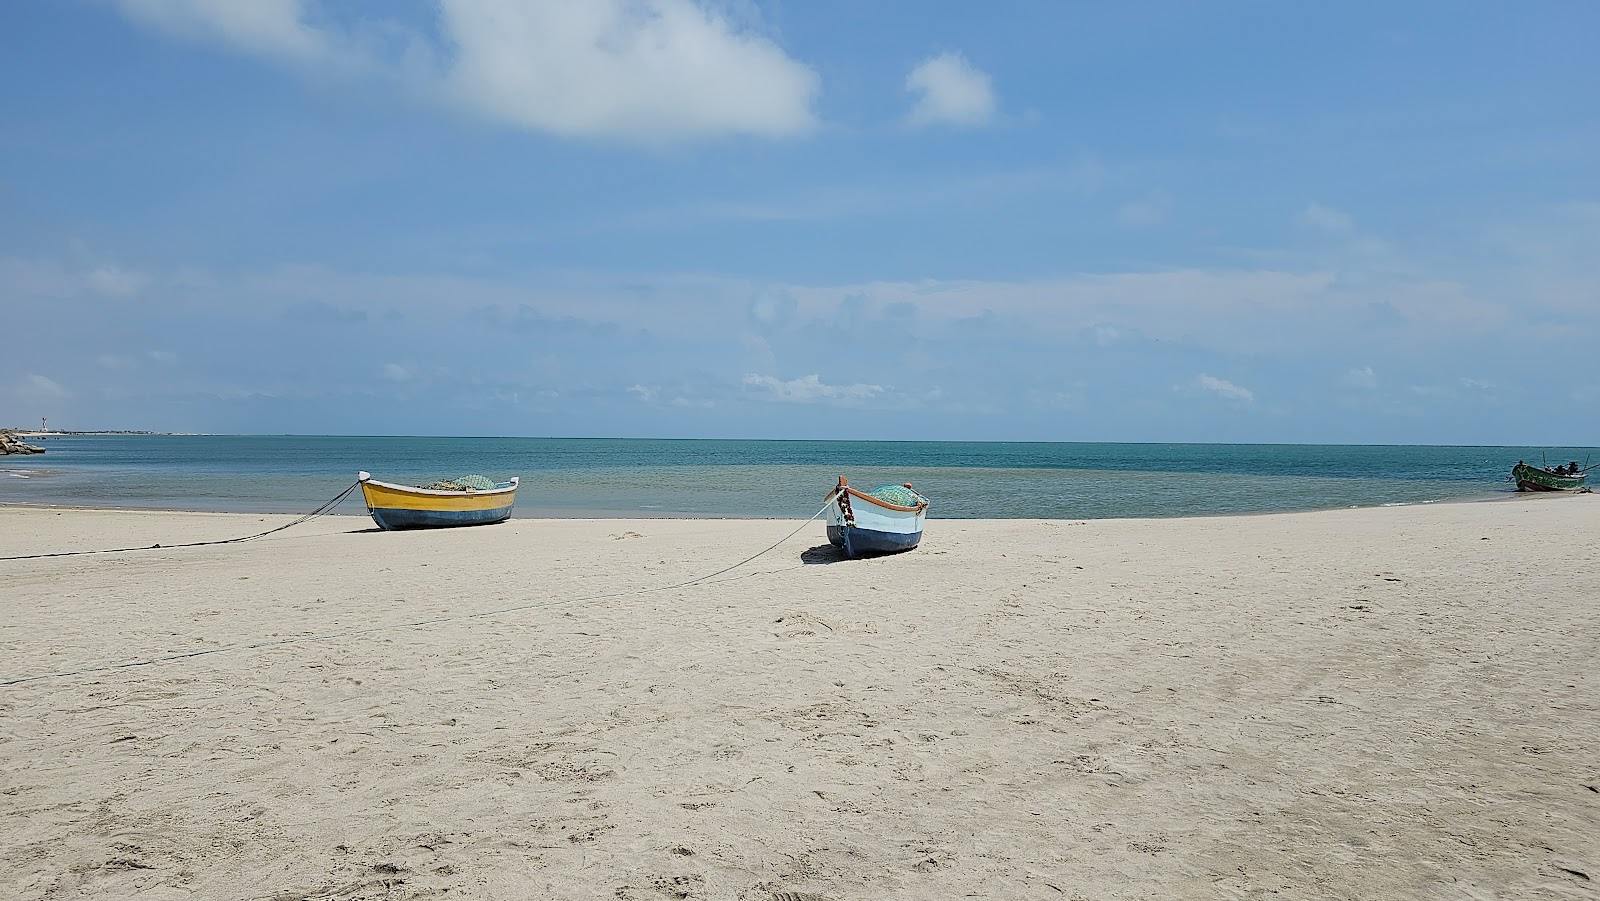 Foto af Arichal Munai Beach - populært sted blandt afslapningskendere